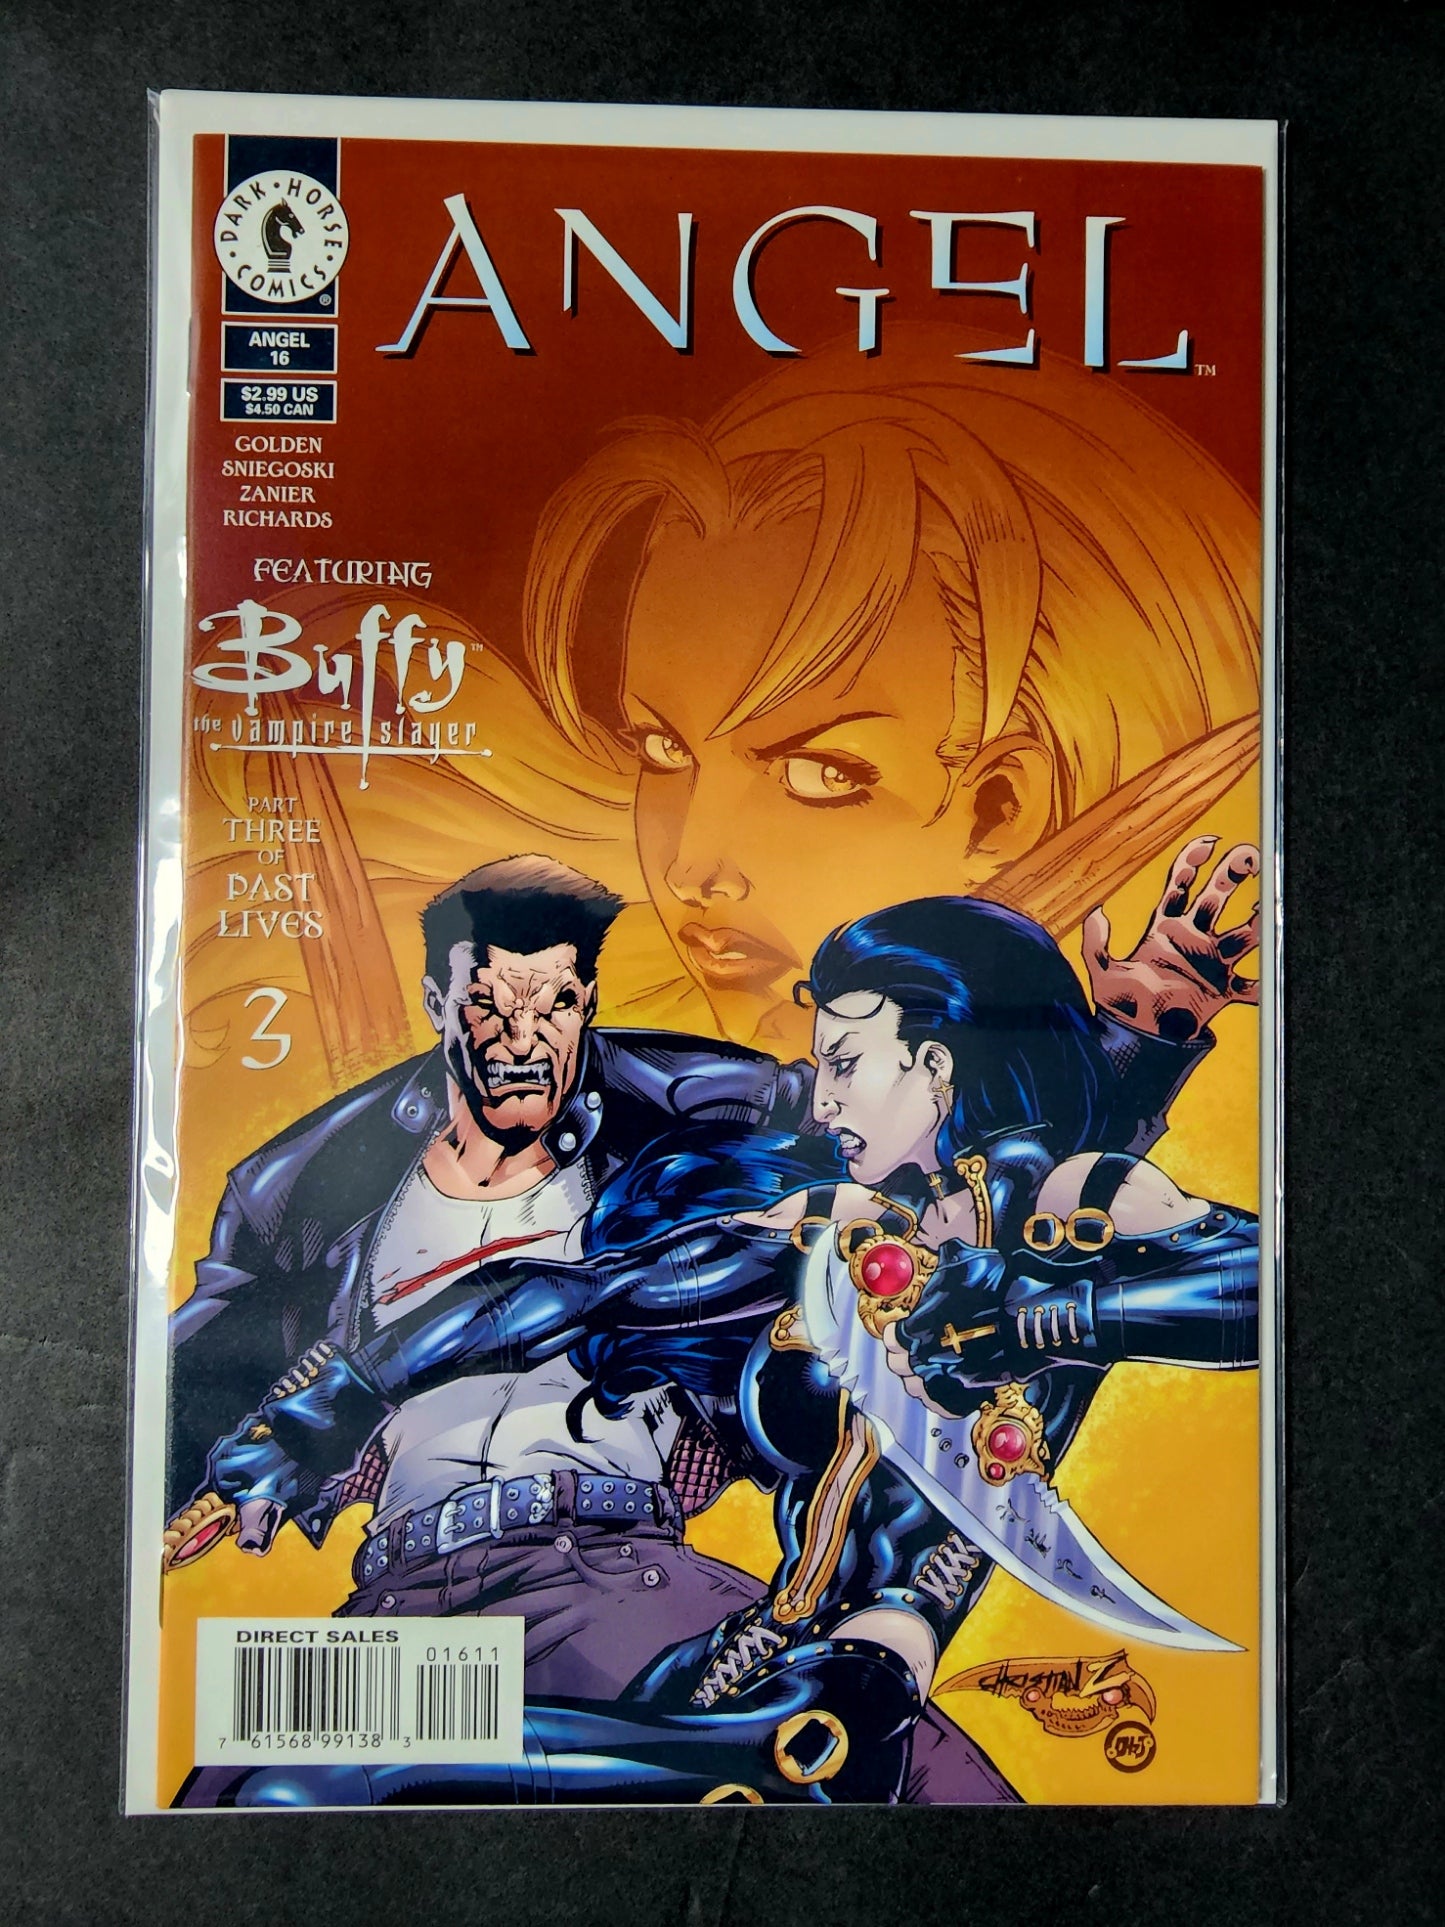 Angel #16 (NM-)